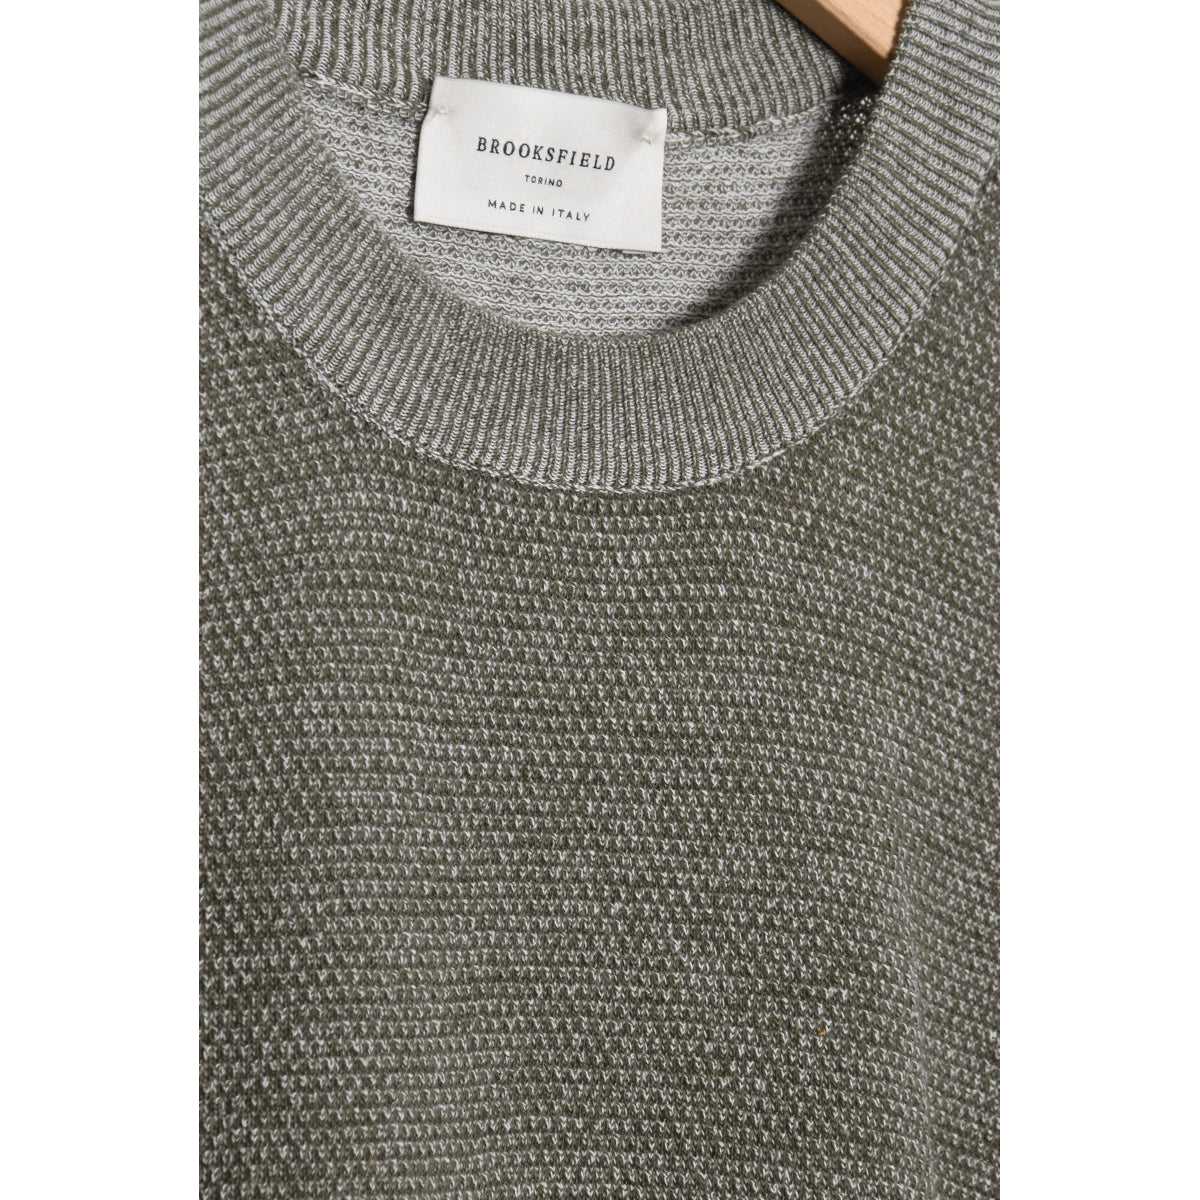 Brooksfield Crew Sweater rice stitch cotton oregano/panna